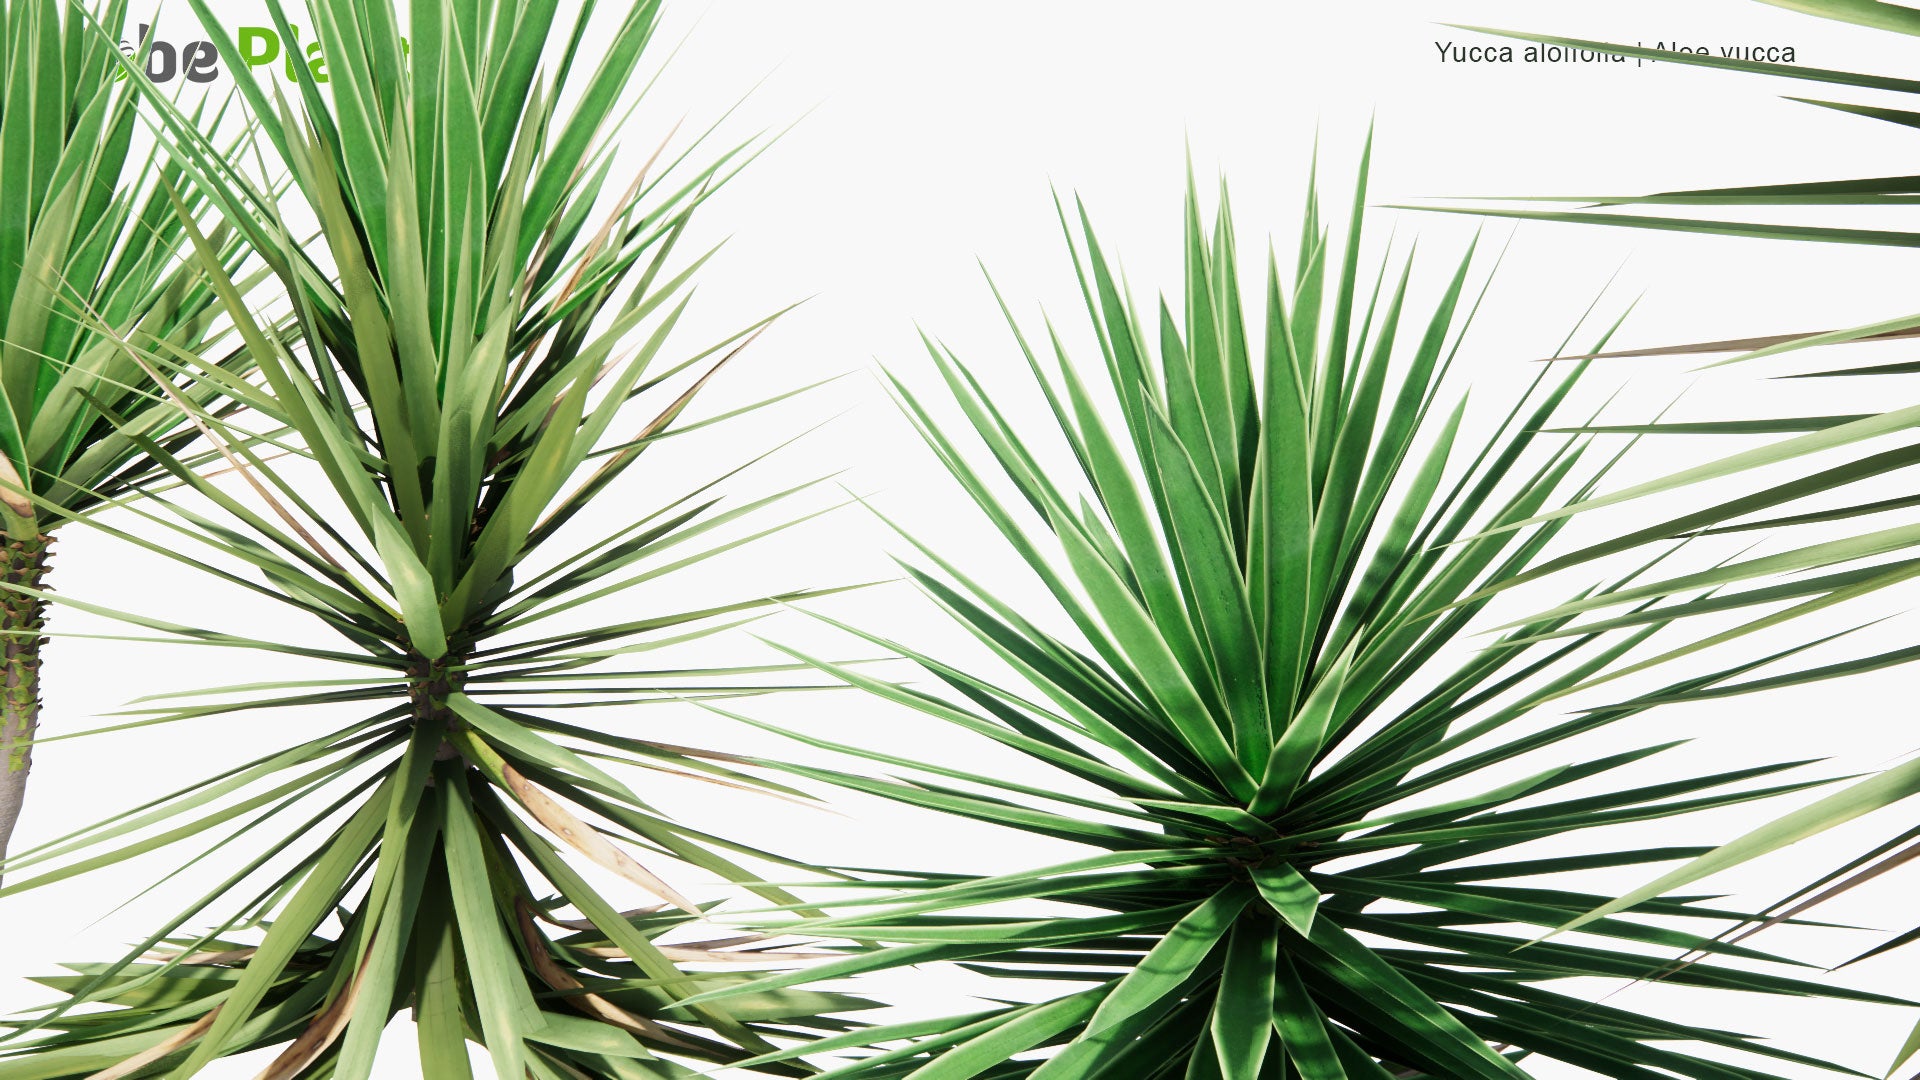 Low Poly Yucca Aloifolia - Aloe Yucca, Dagger Plant, Spanish Bayonet (3D Model)